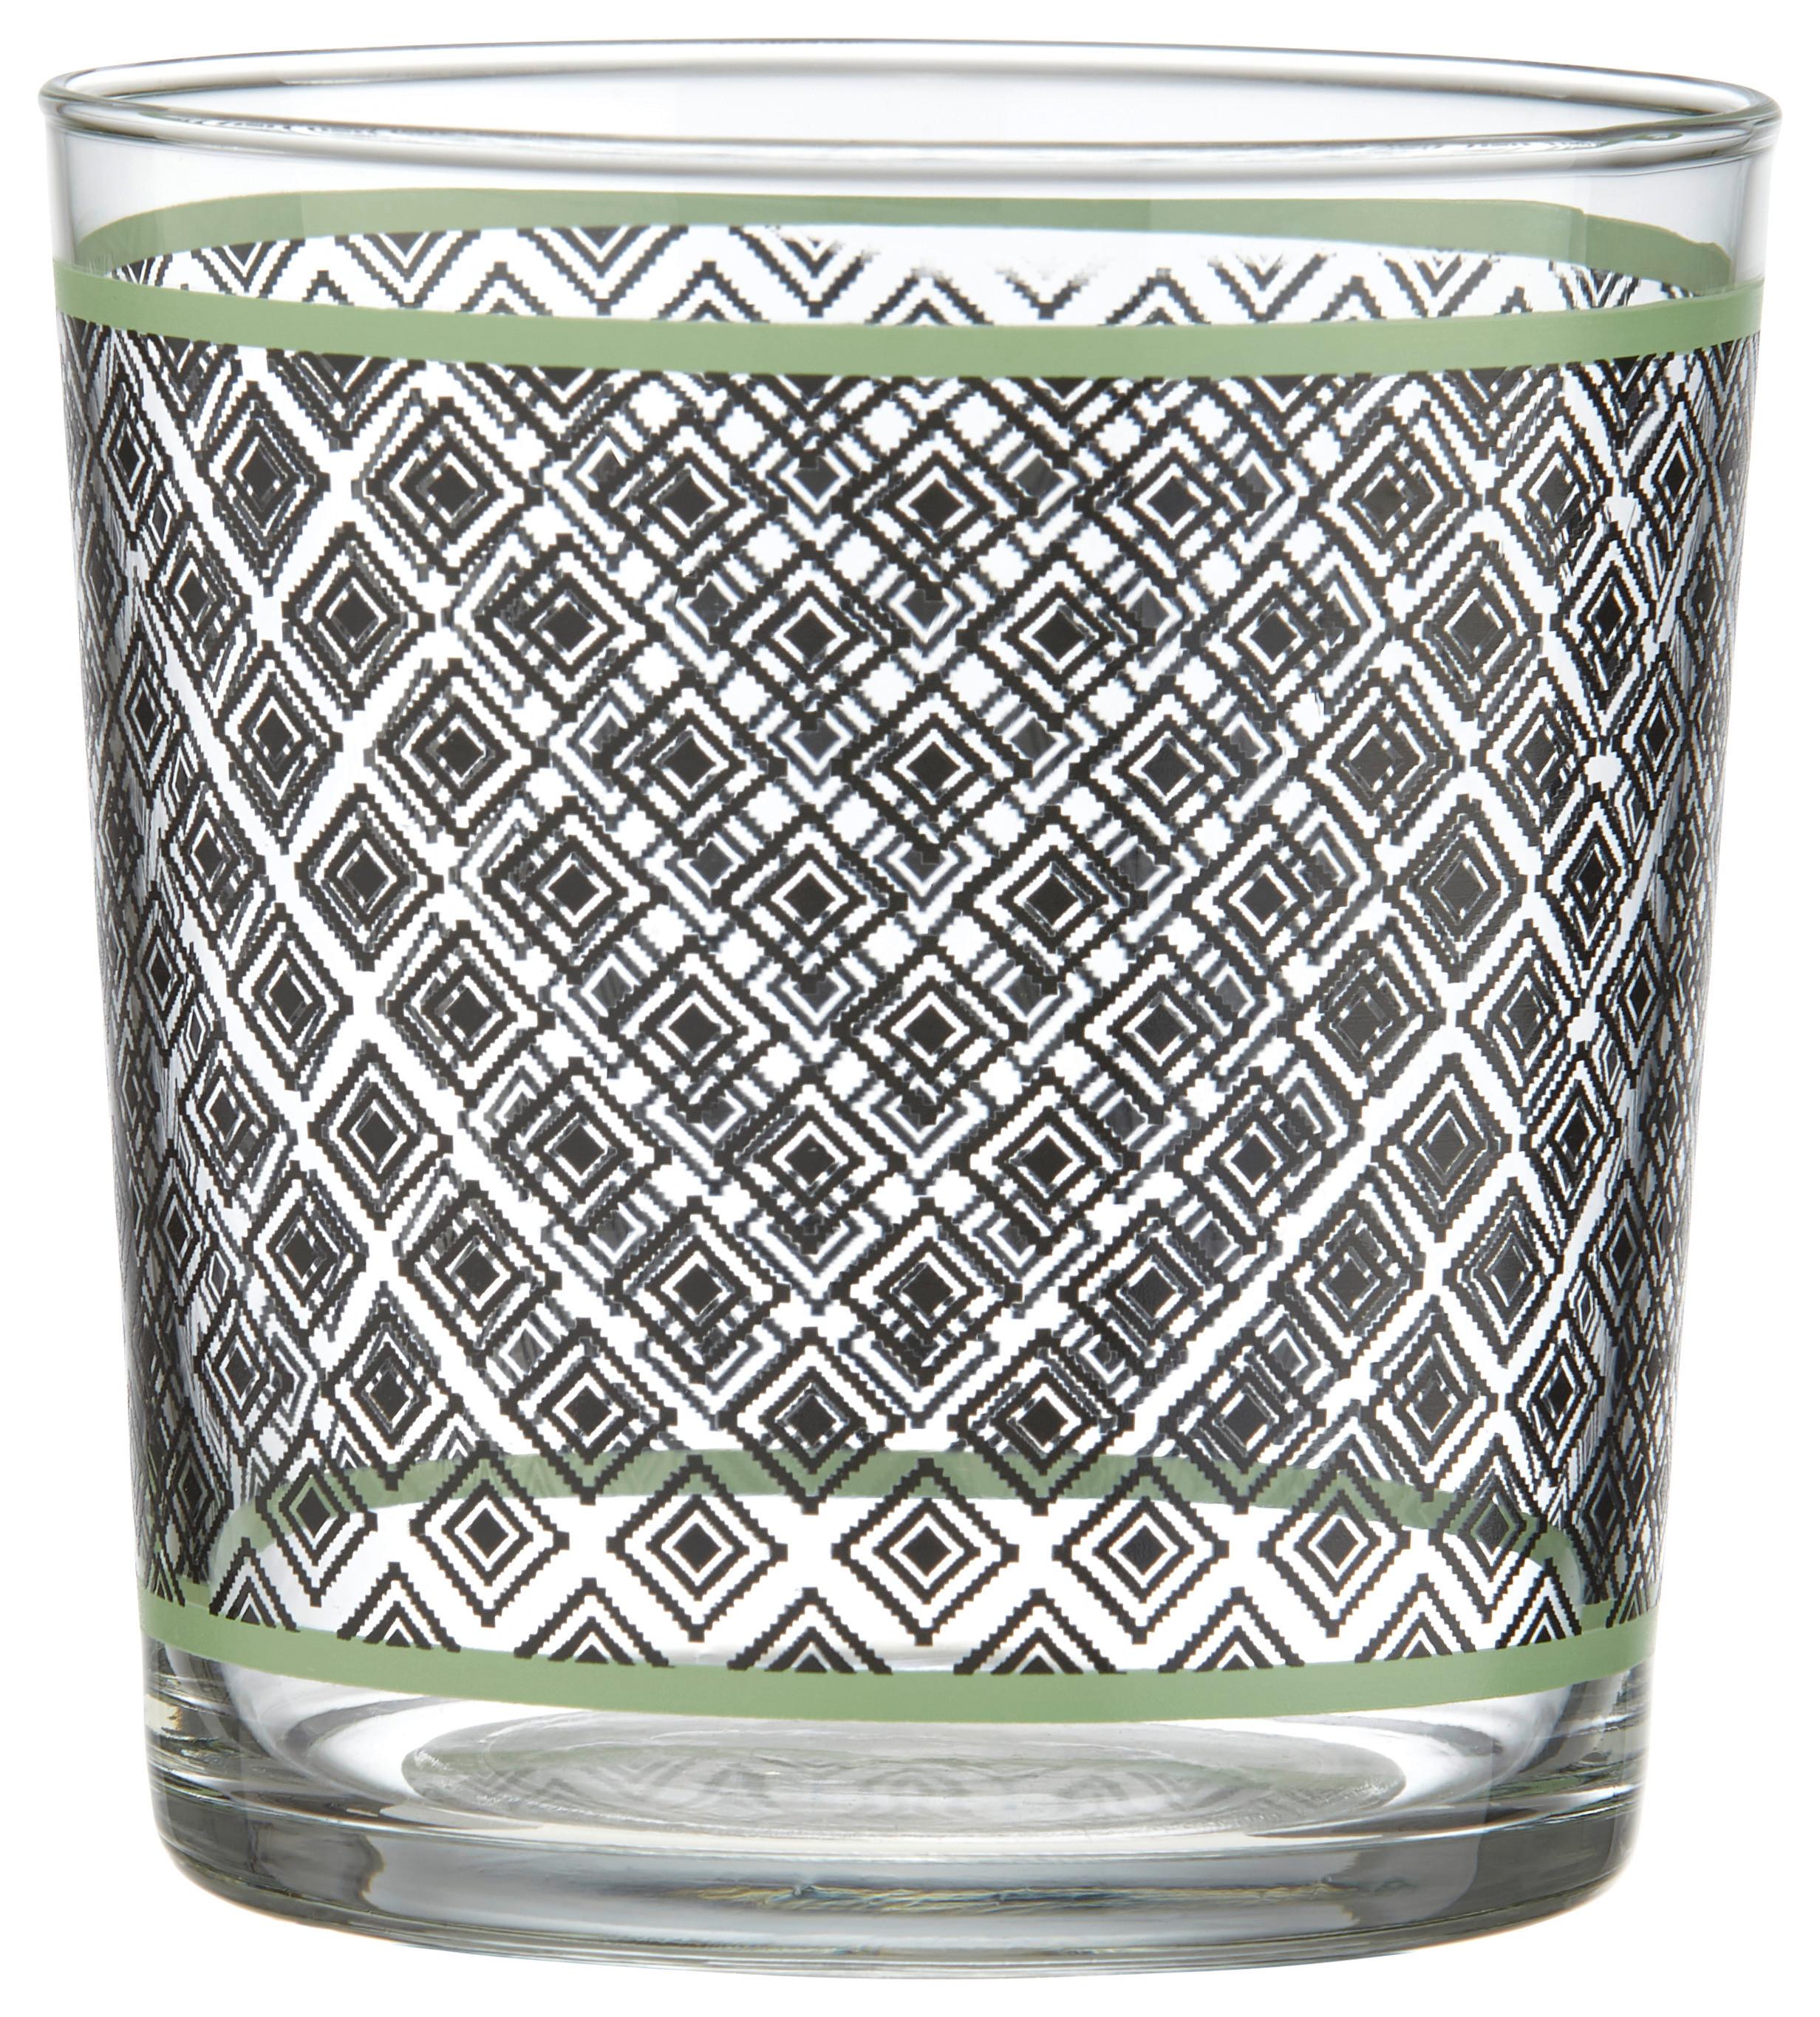 Trinkglas Lime Affaire versch. Designs - Transparent/Schwarz, LIFESTYLE, Glas (8,5/8,9cm) - Modern Living